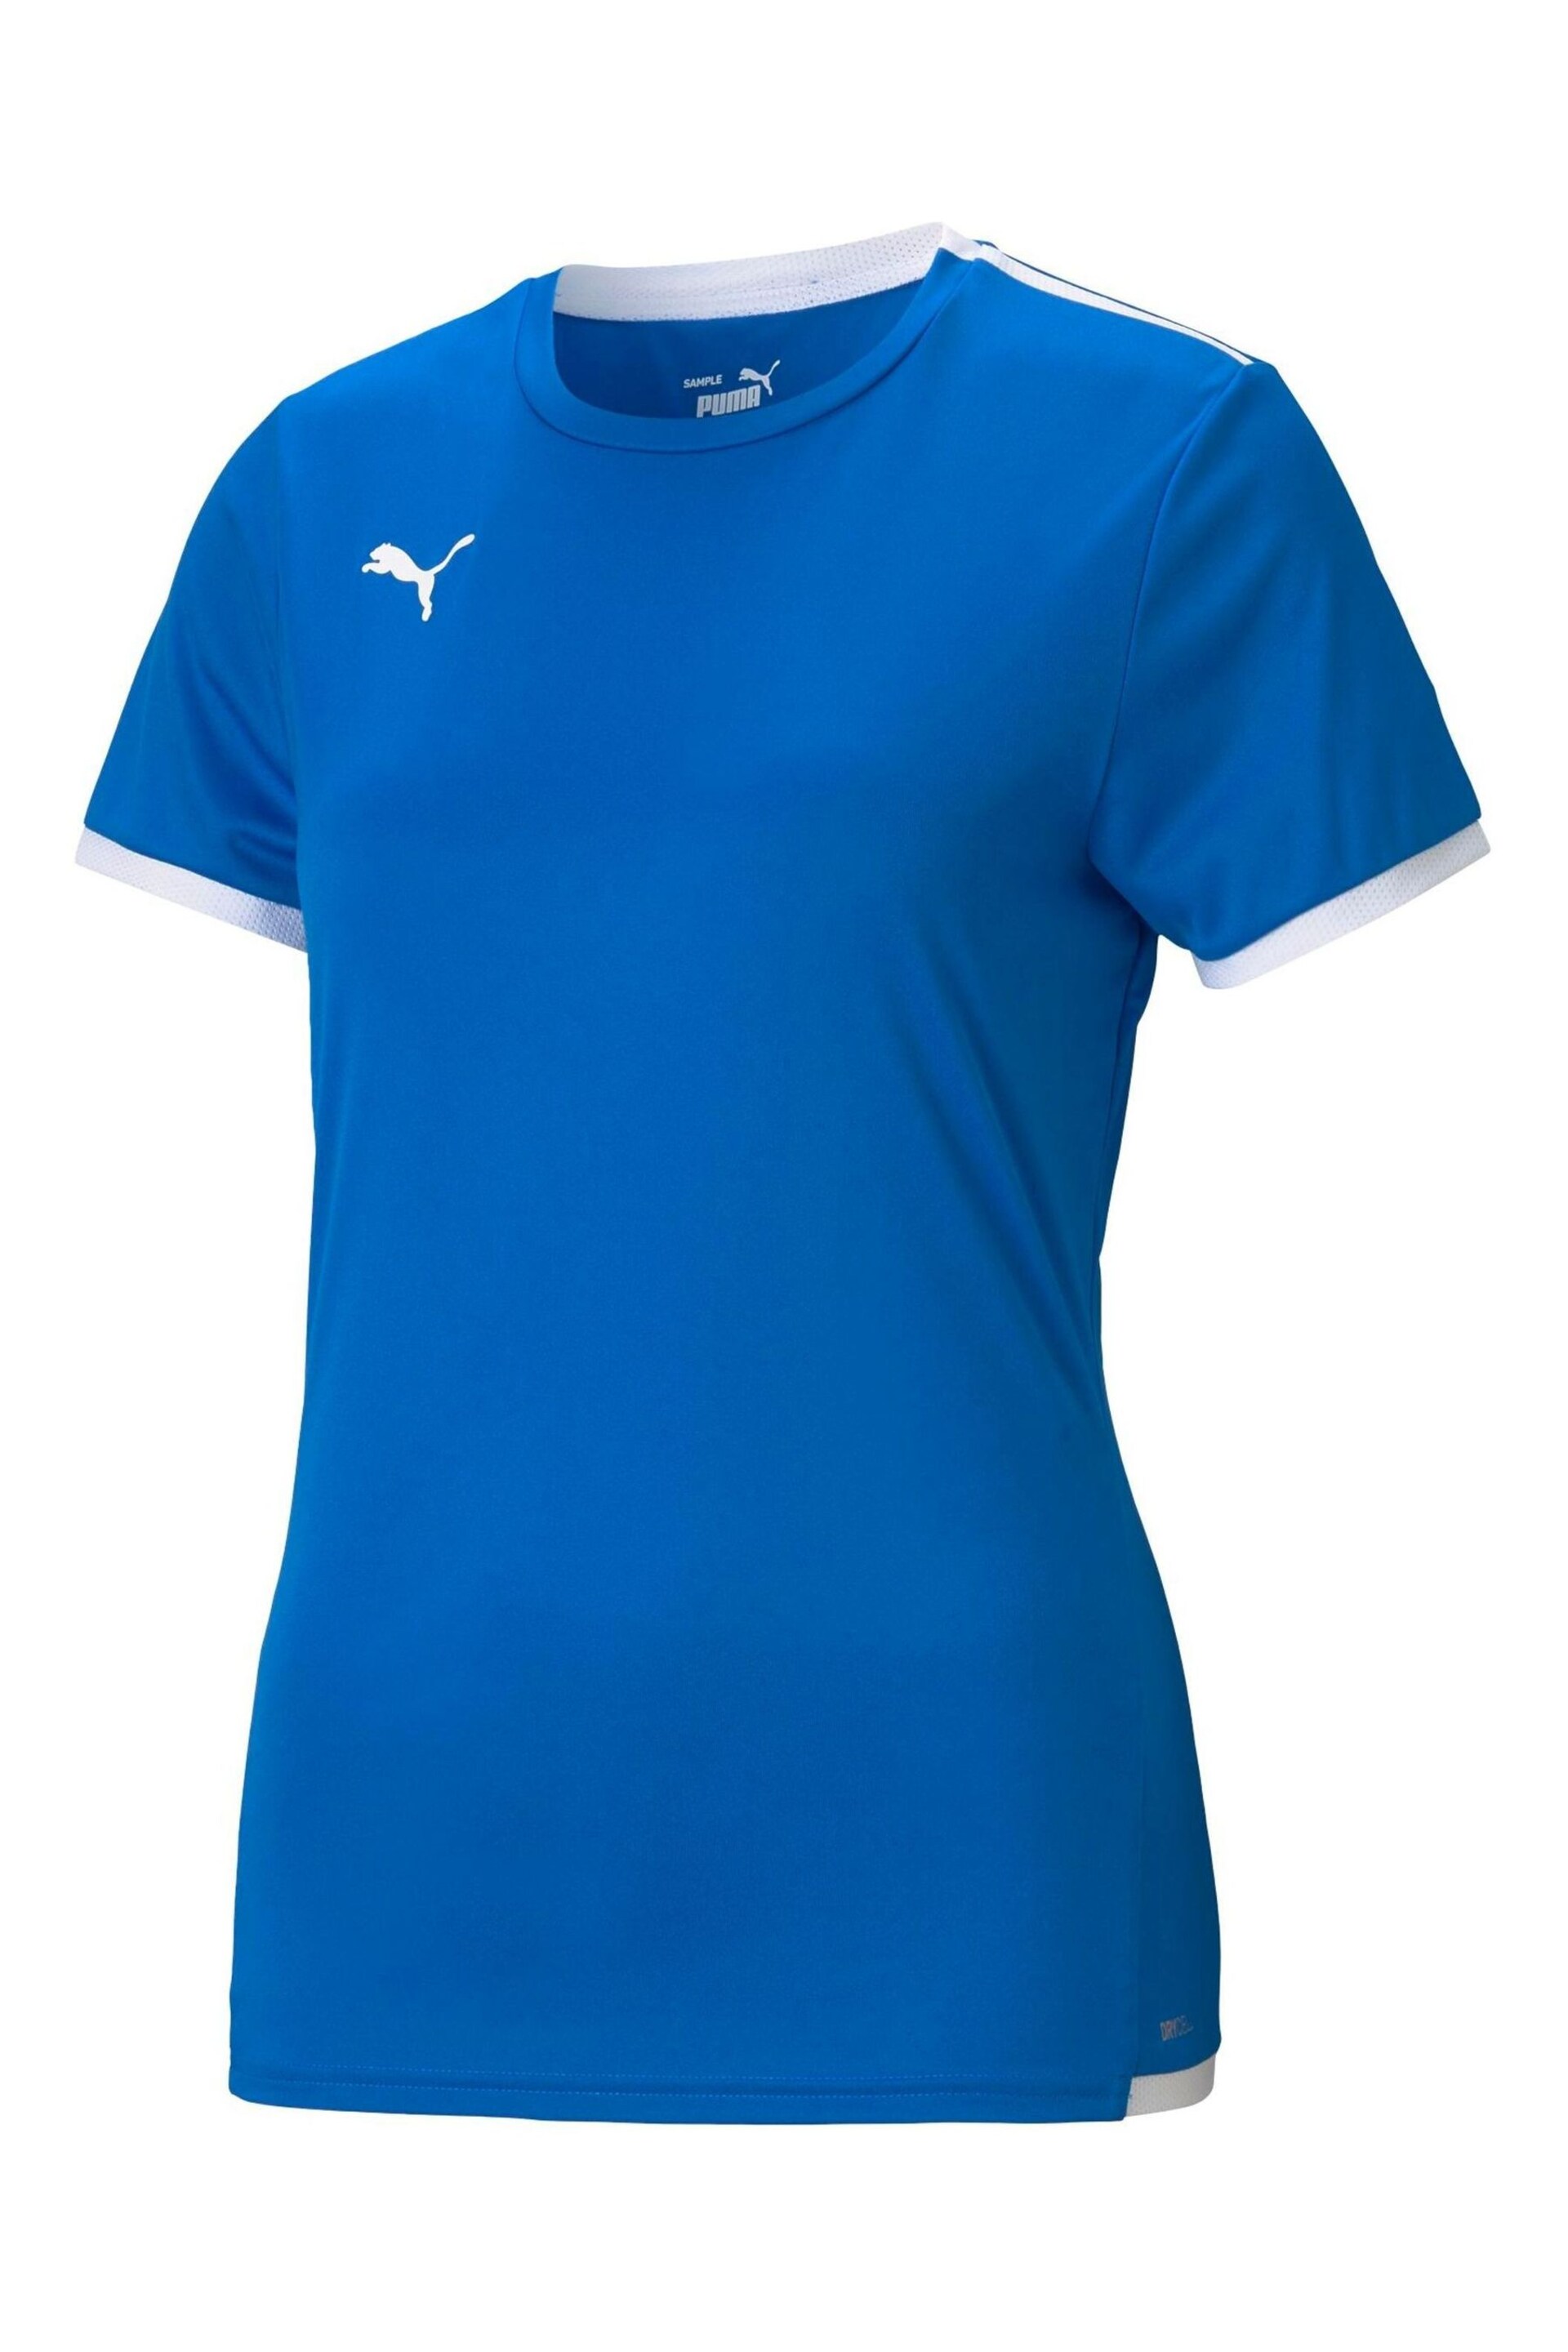 Puma Blue Womens Teamliga Football Jersey - Image 1 of 3